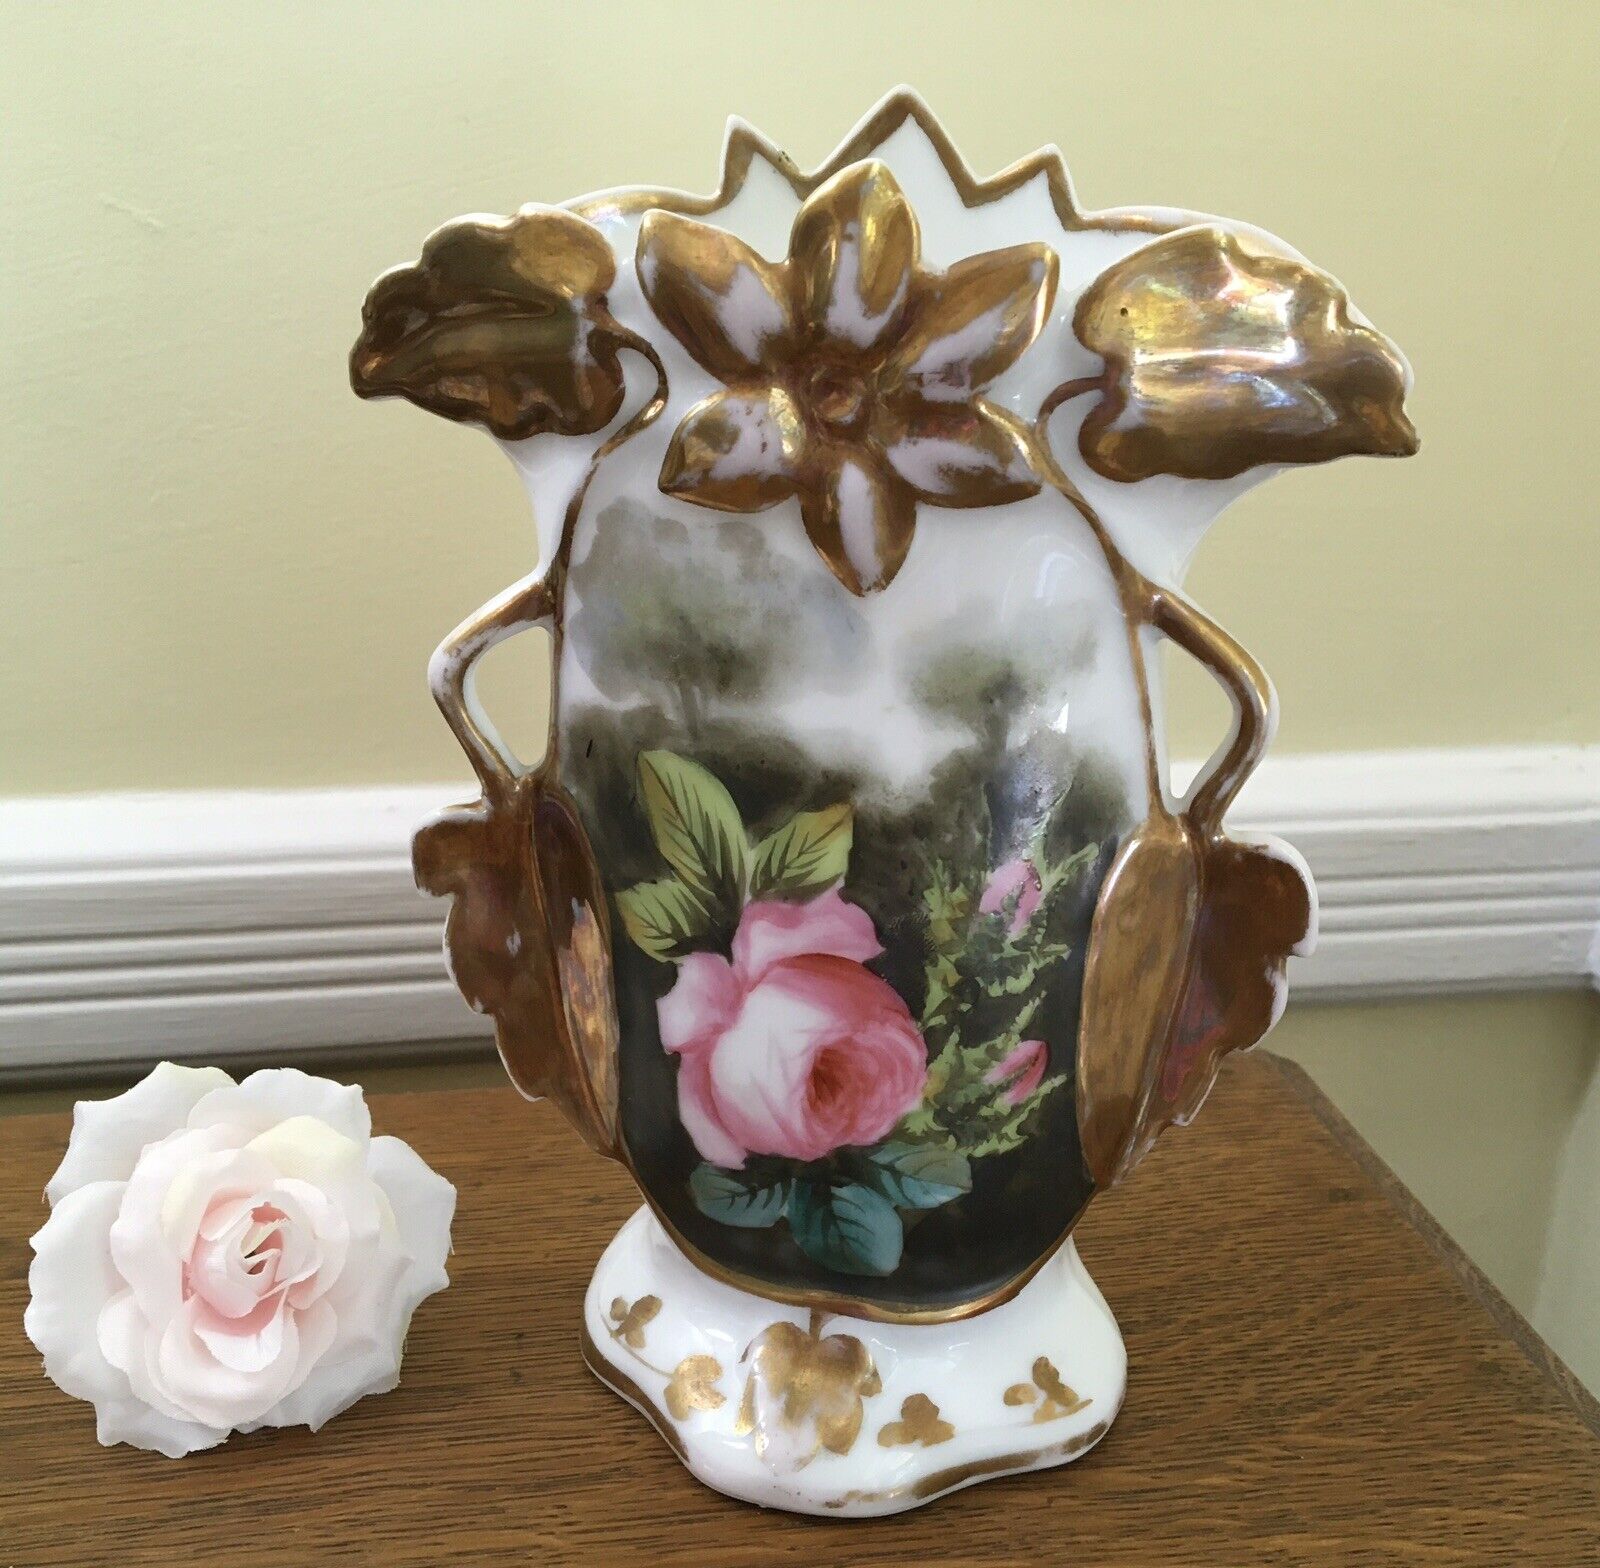 Lovely French Style Porcelain Wedding Vase with Handpainted Rose & Shiny Gold